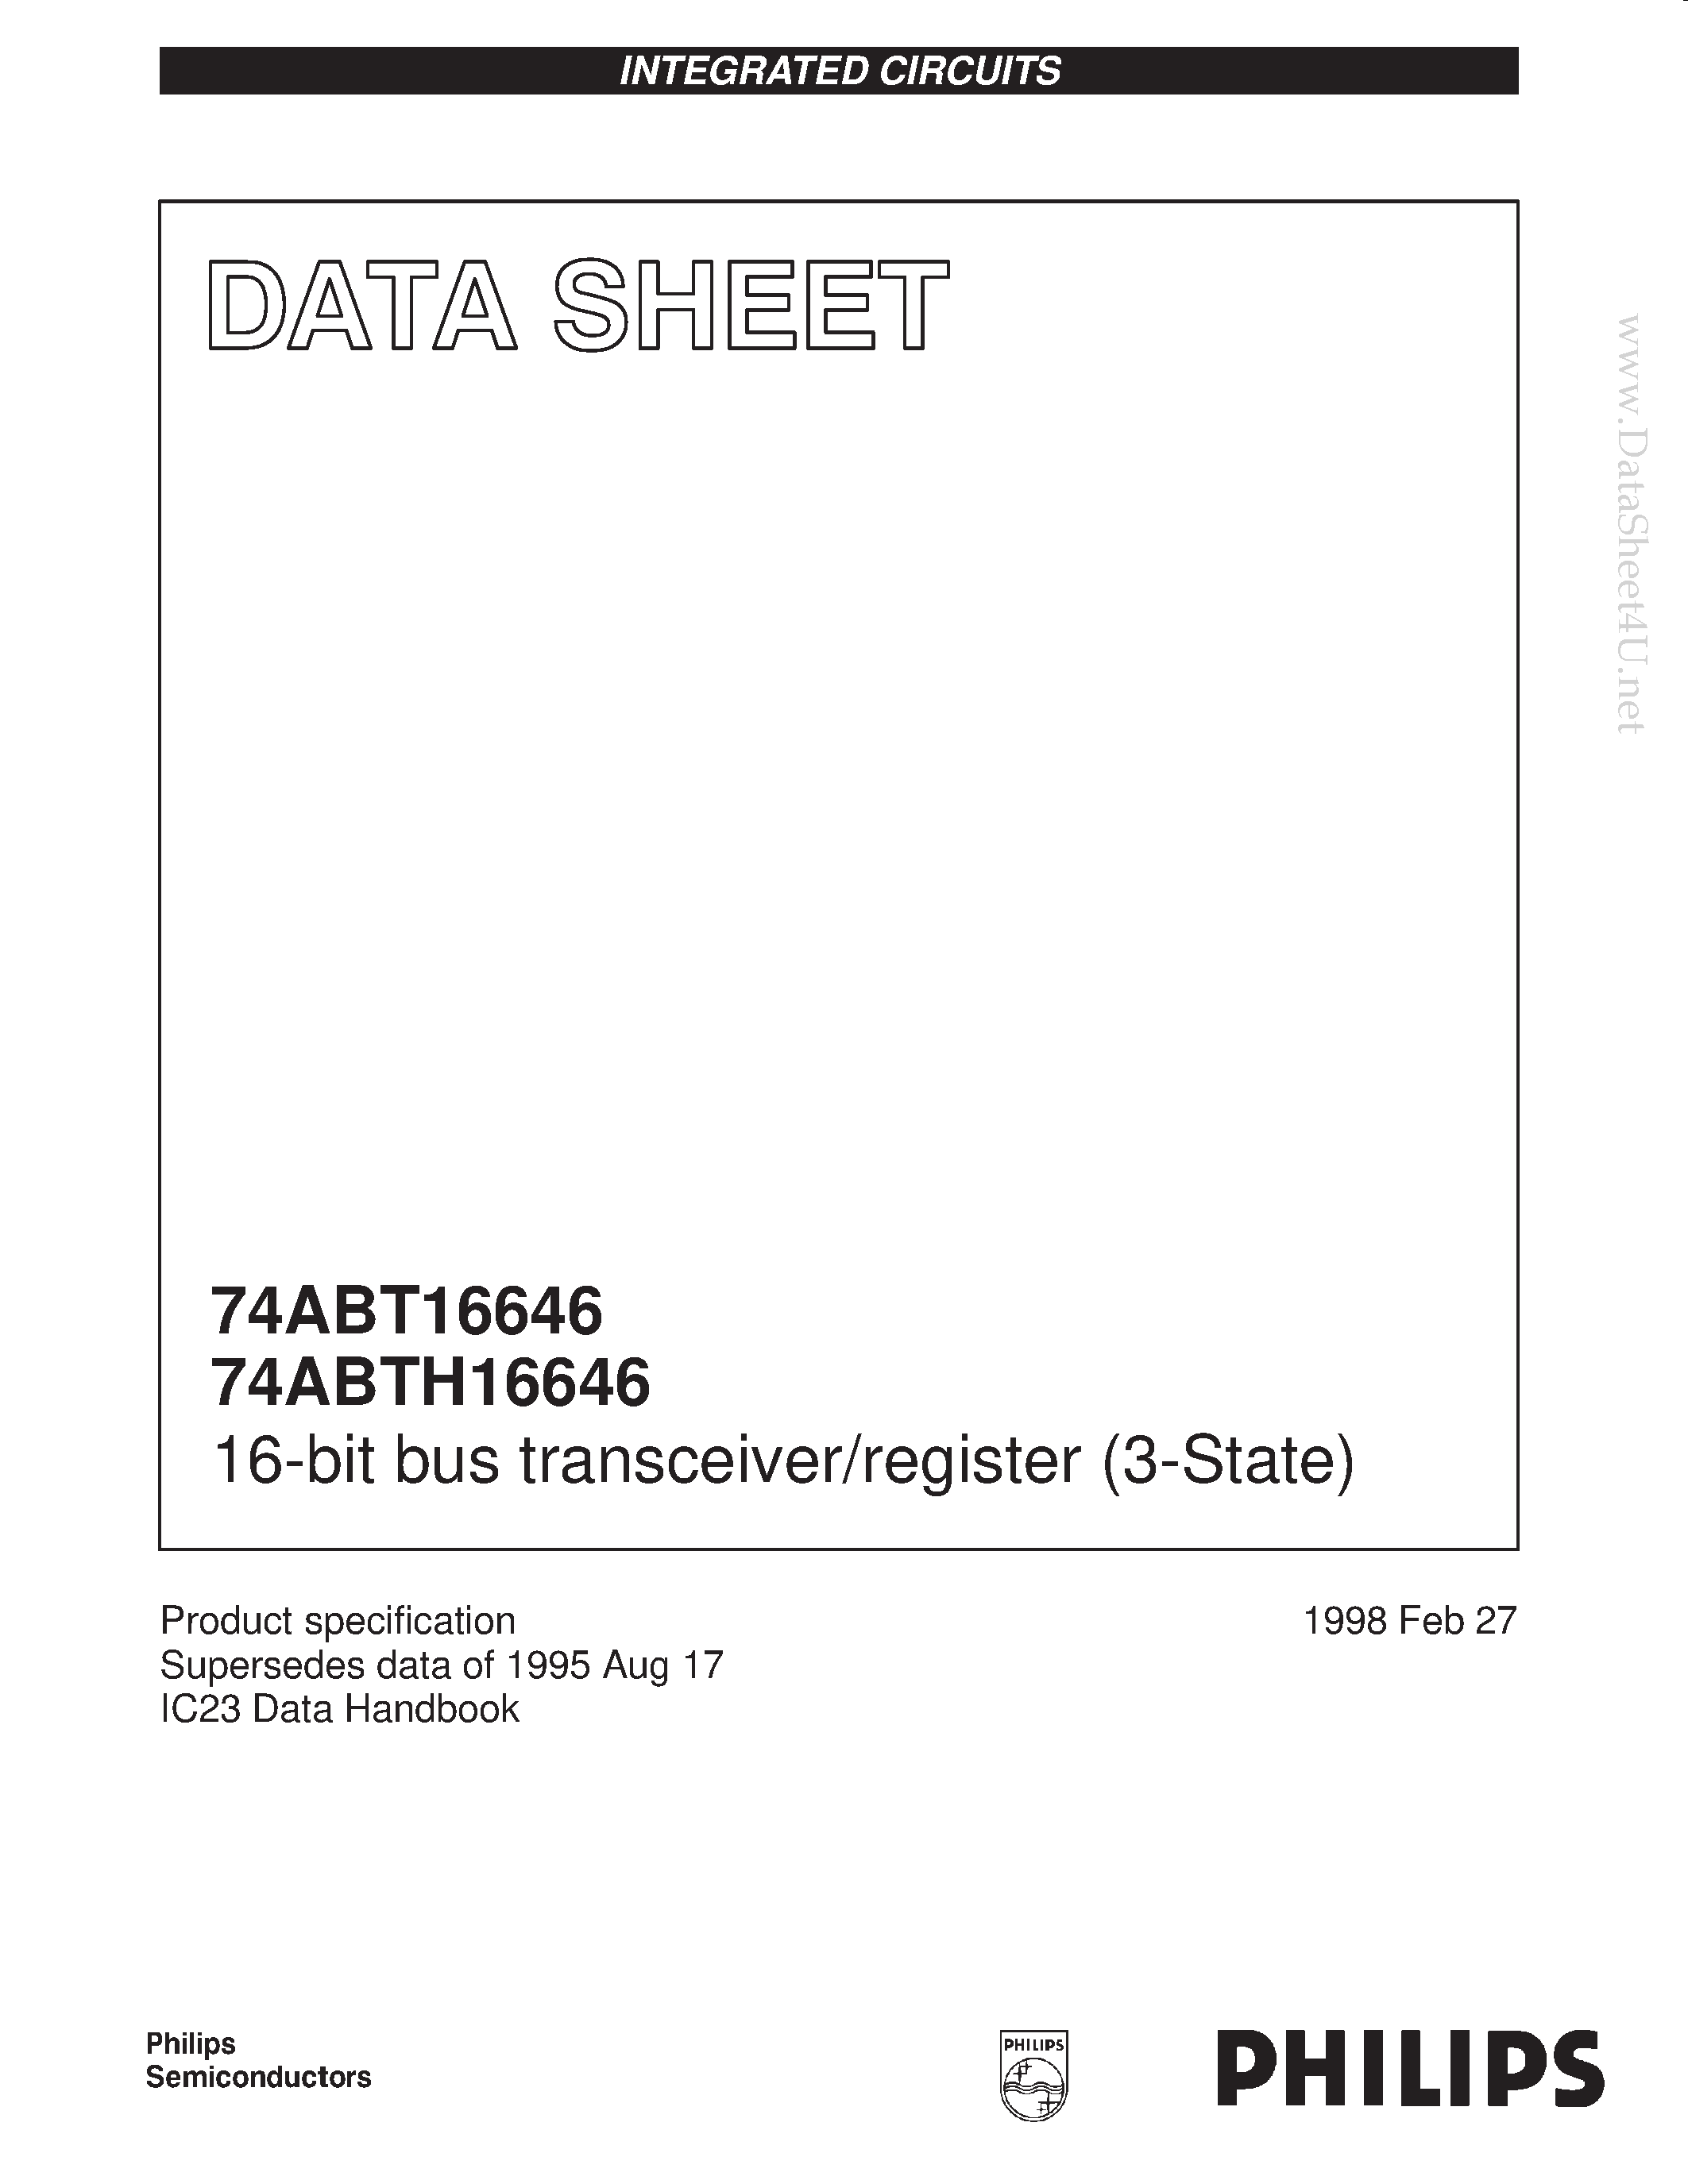 Даташит 74ABTH16646DGG - 16-bit bus transceiver/register 3-State страница 1